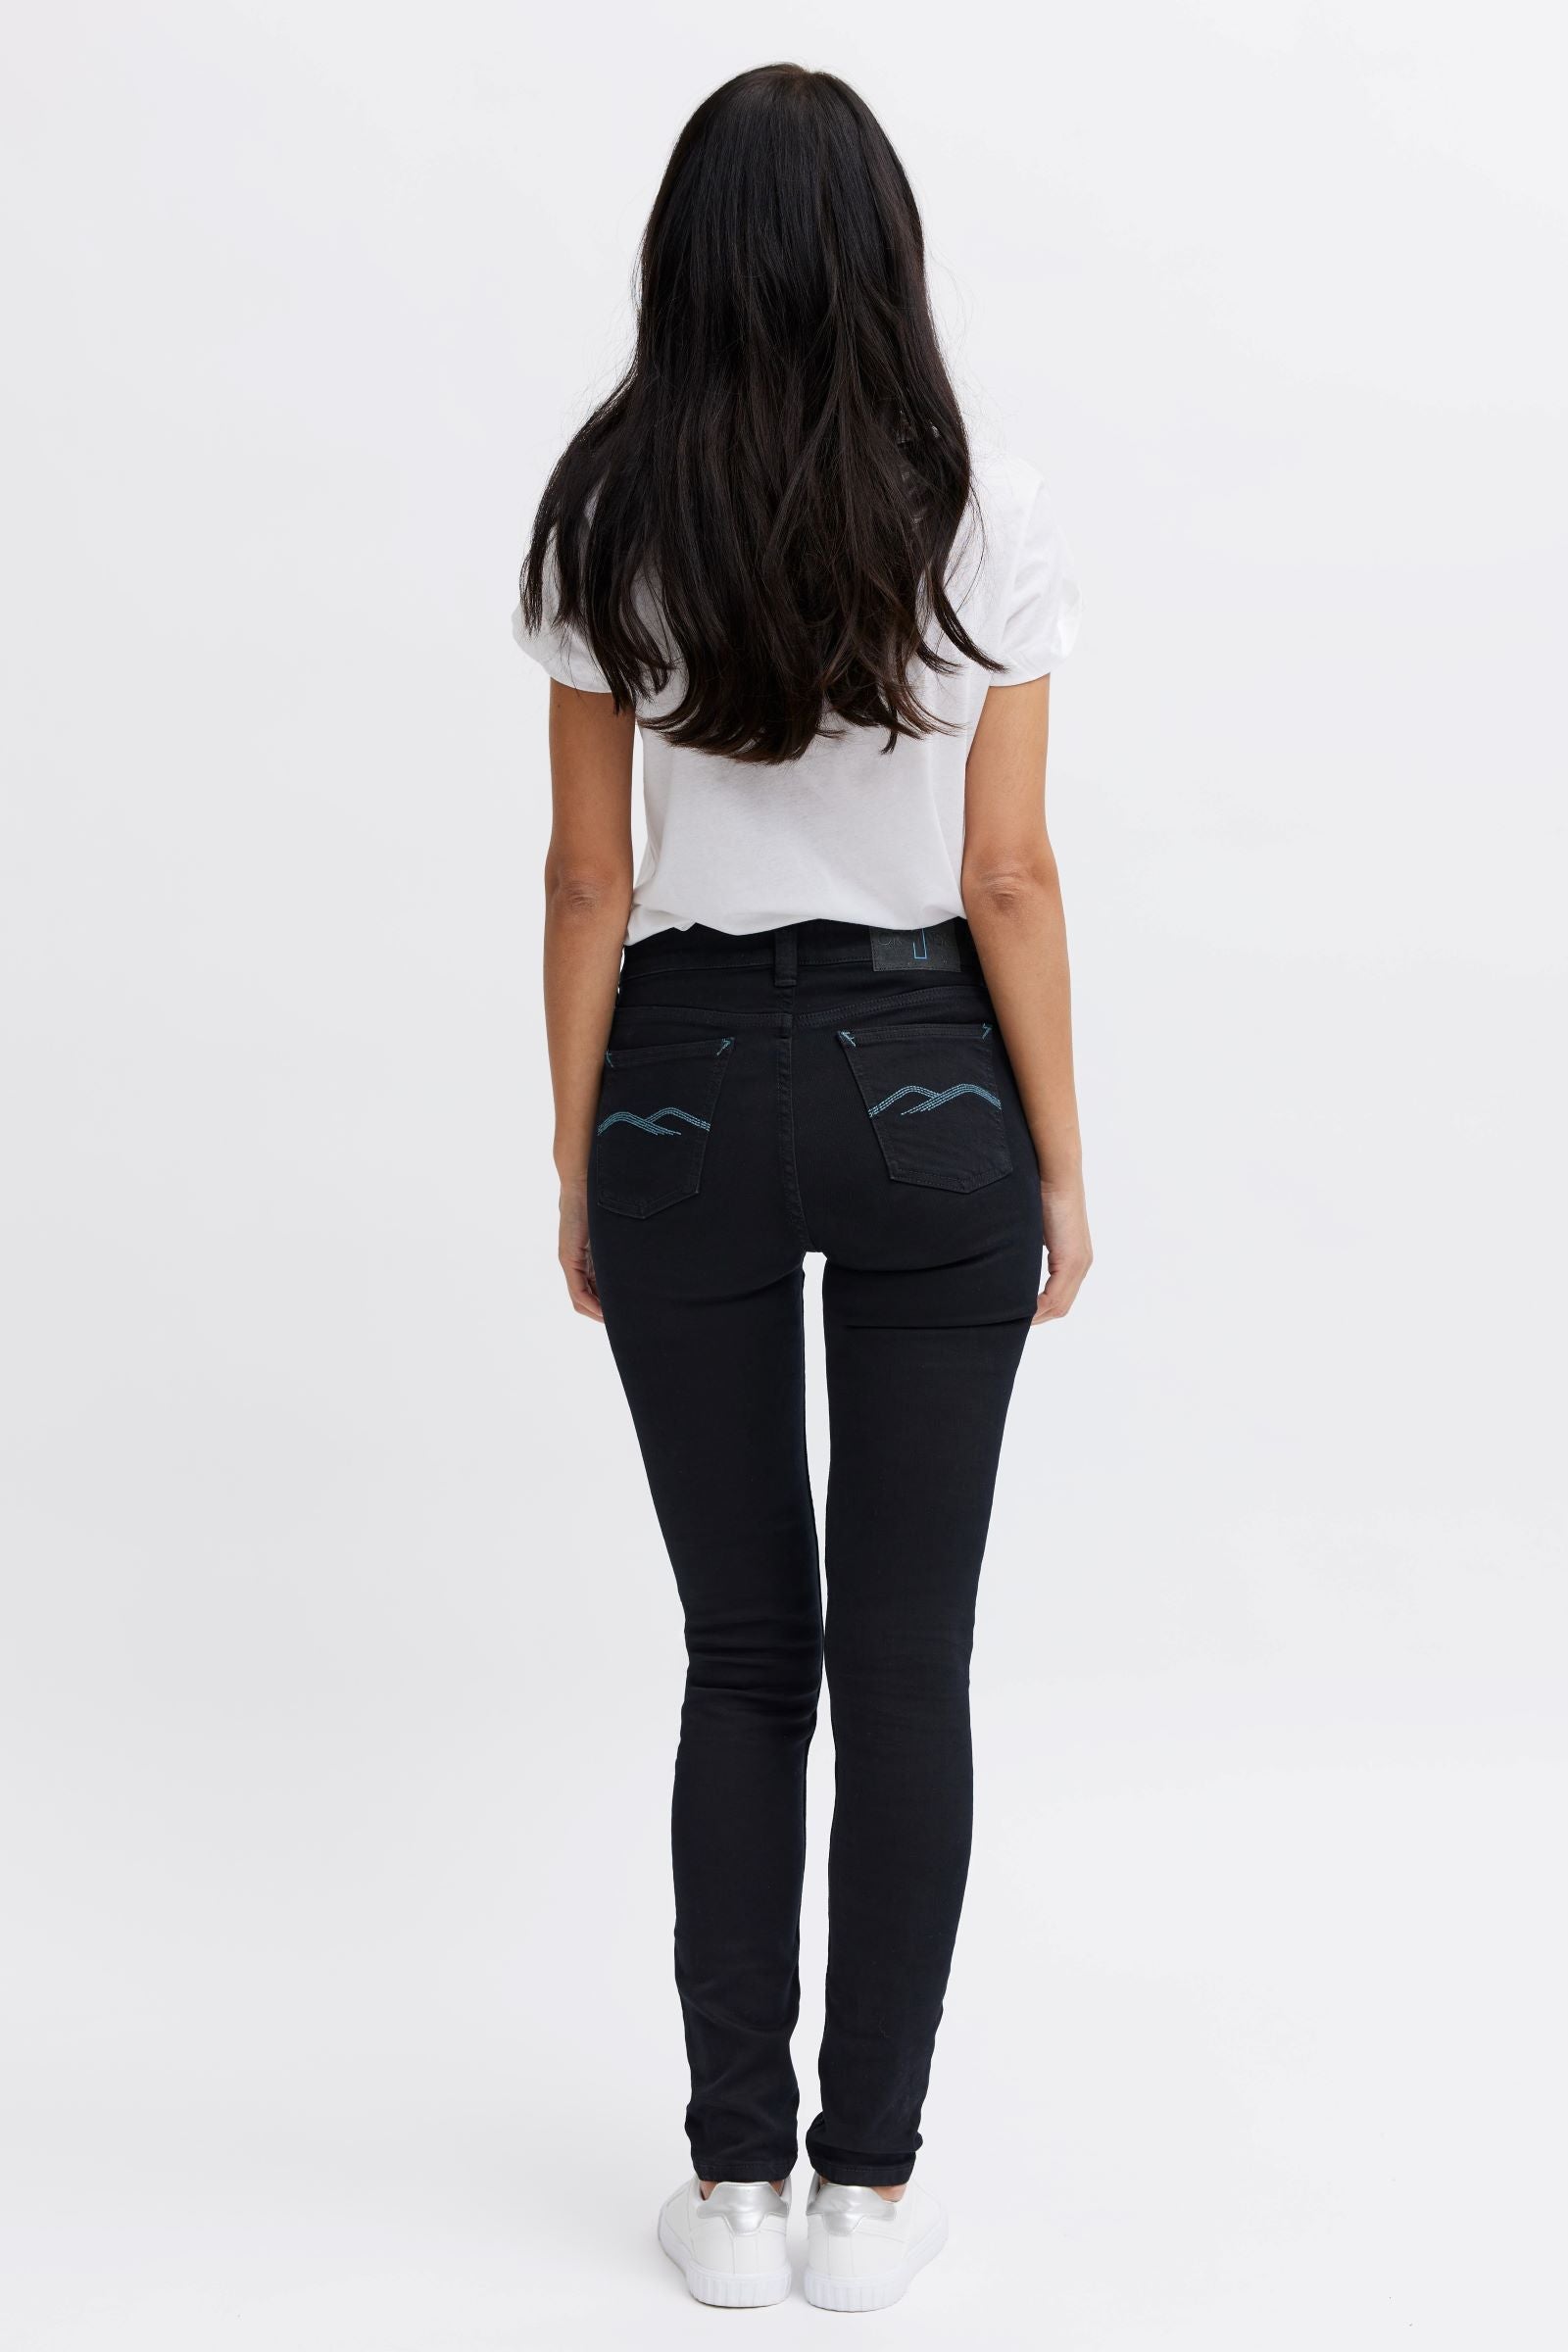 Organic cotton, stylish black jeans - Women's skinny fit